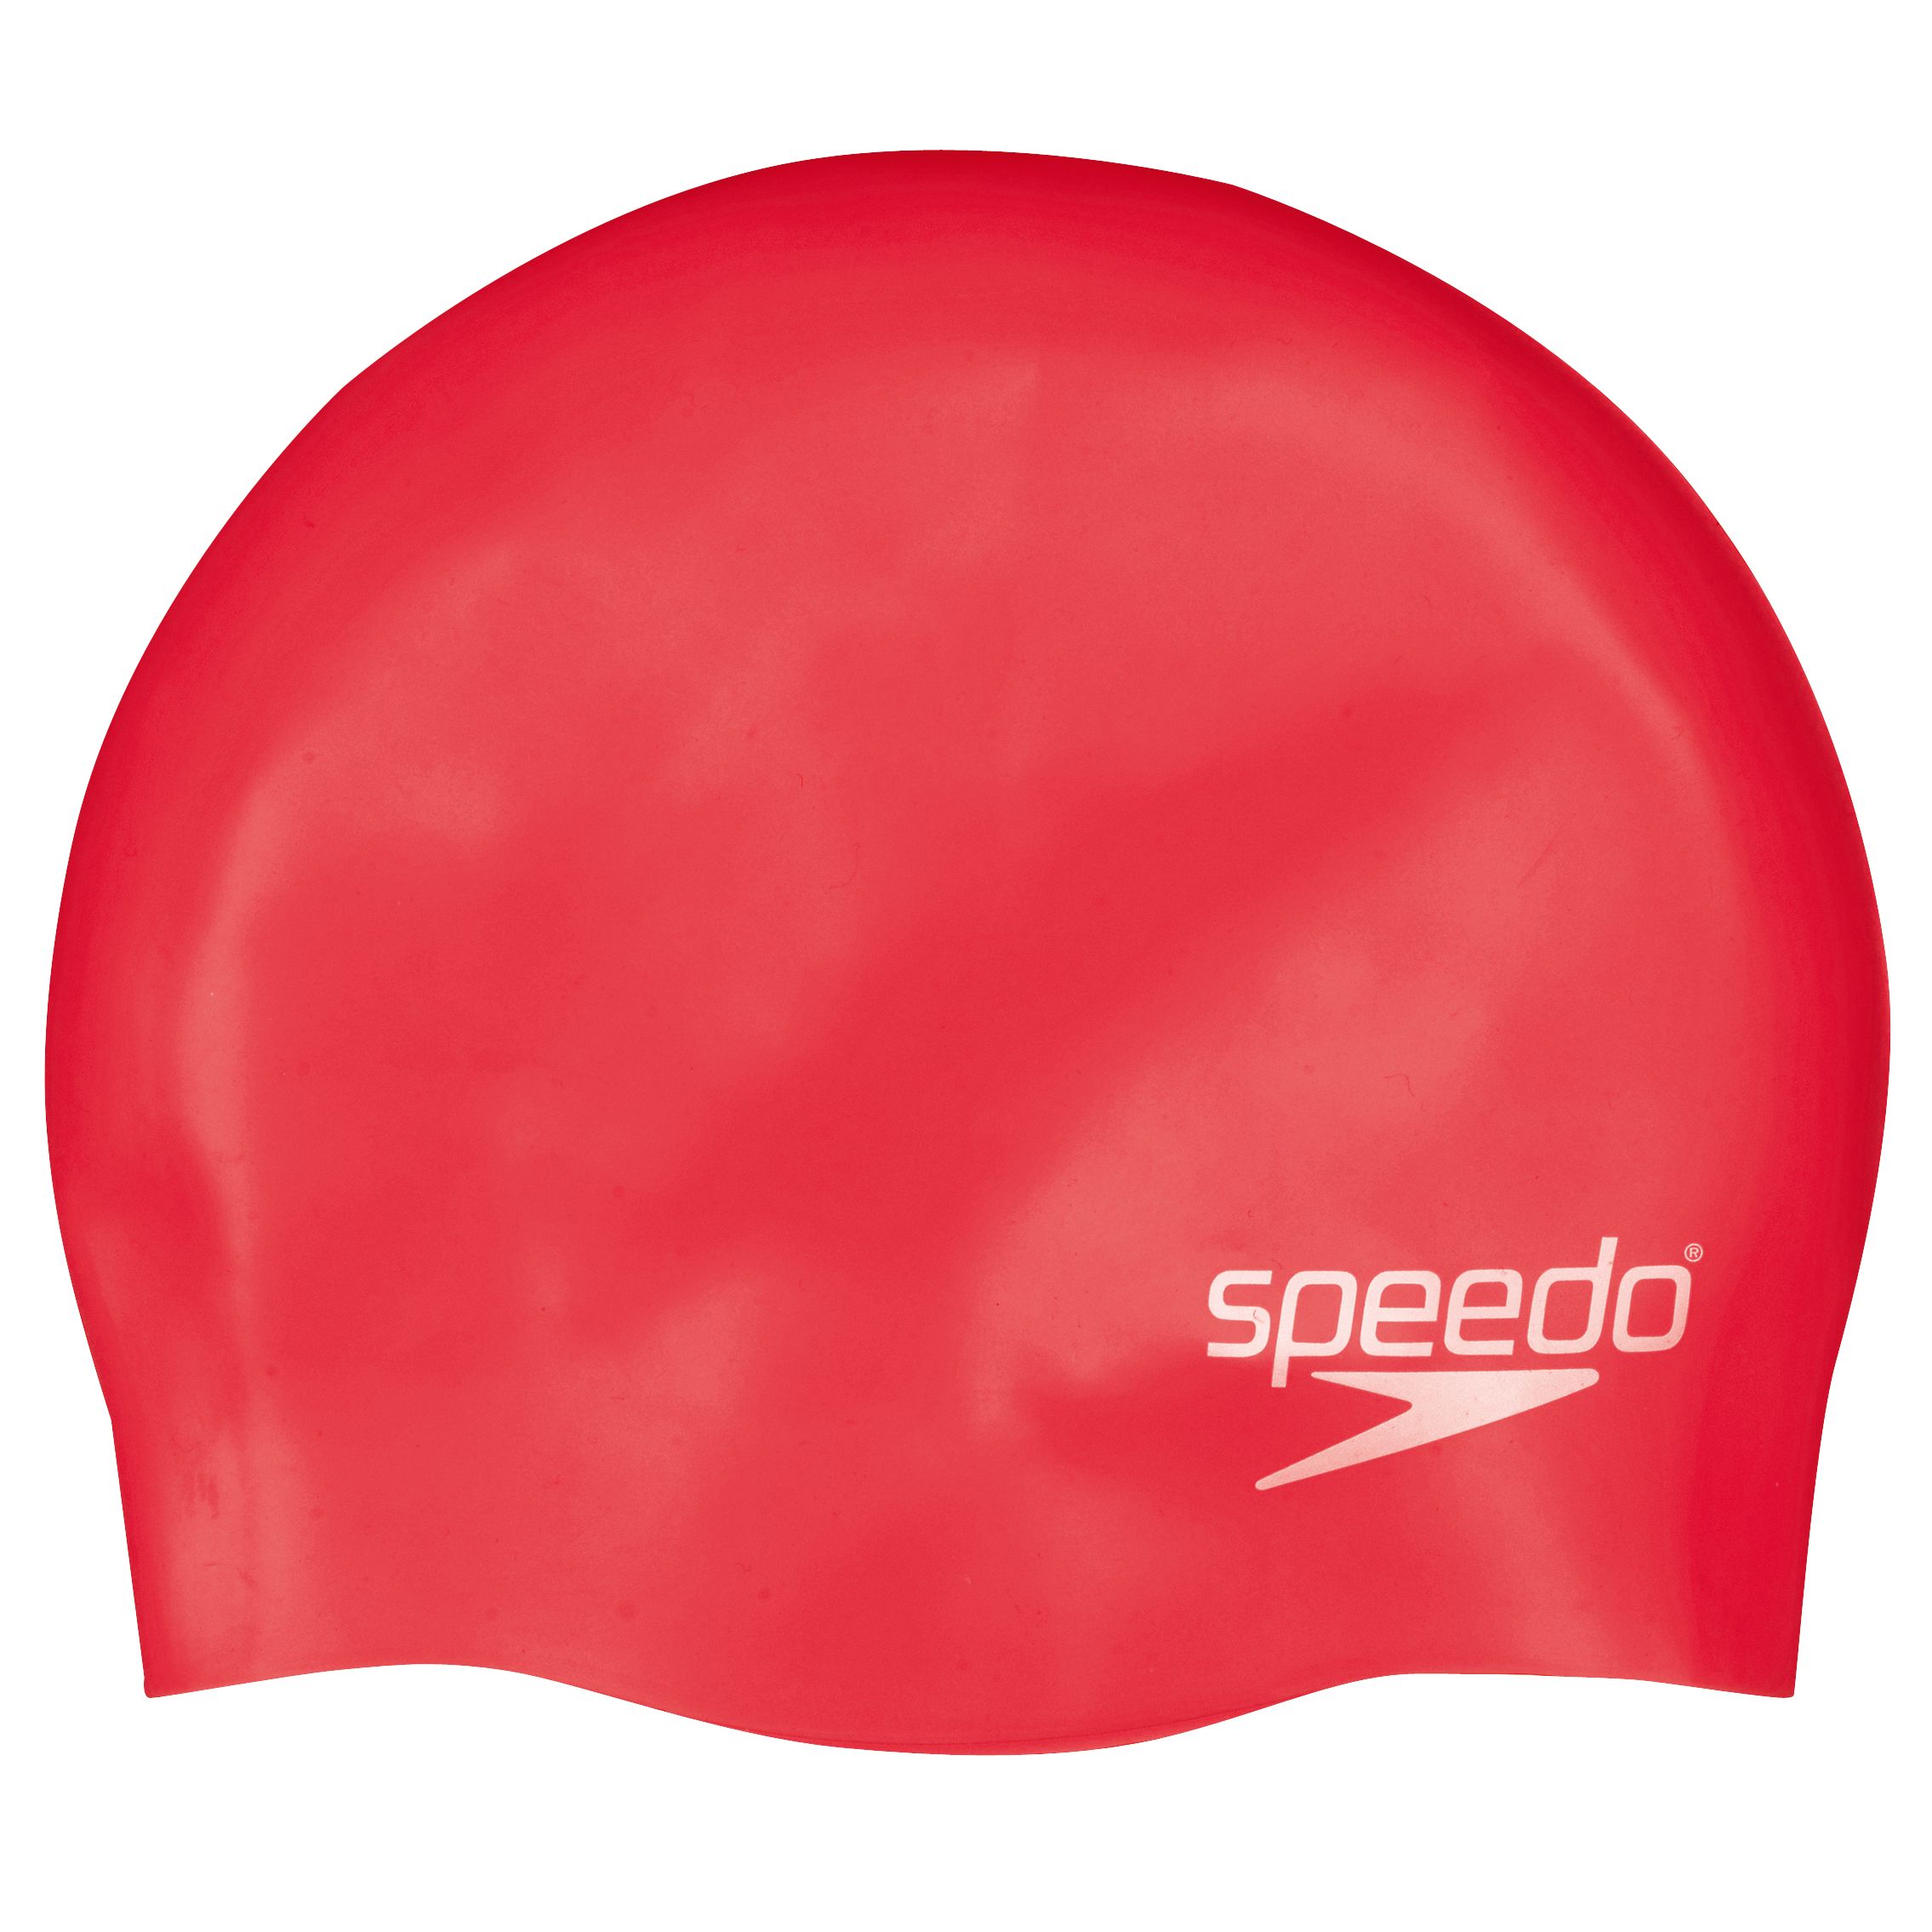 speedo swim cap